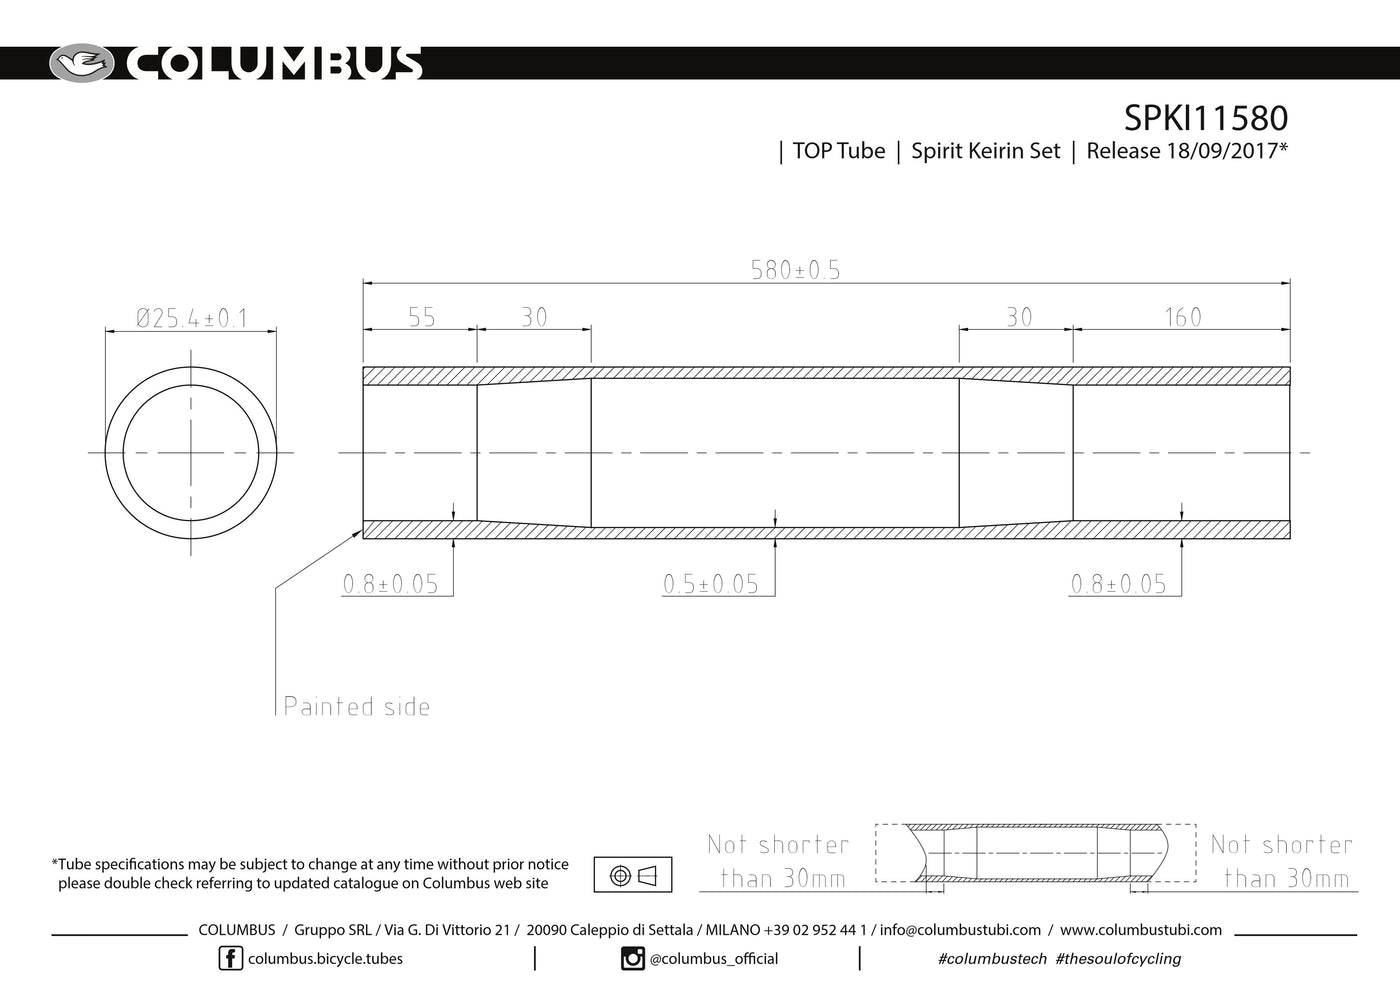 SPKI11580  Columbus Tubing Spirit Keirin top tube - 25.4 diameter - .8/.5/.8 wall thickness. Length = 580